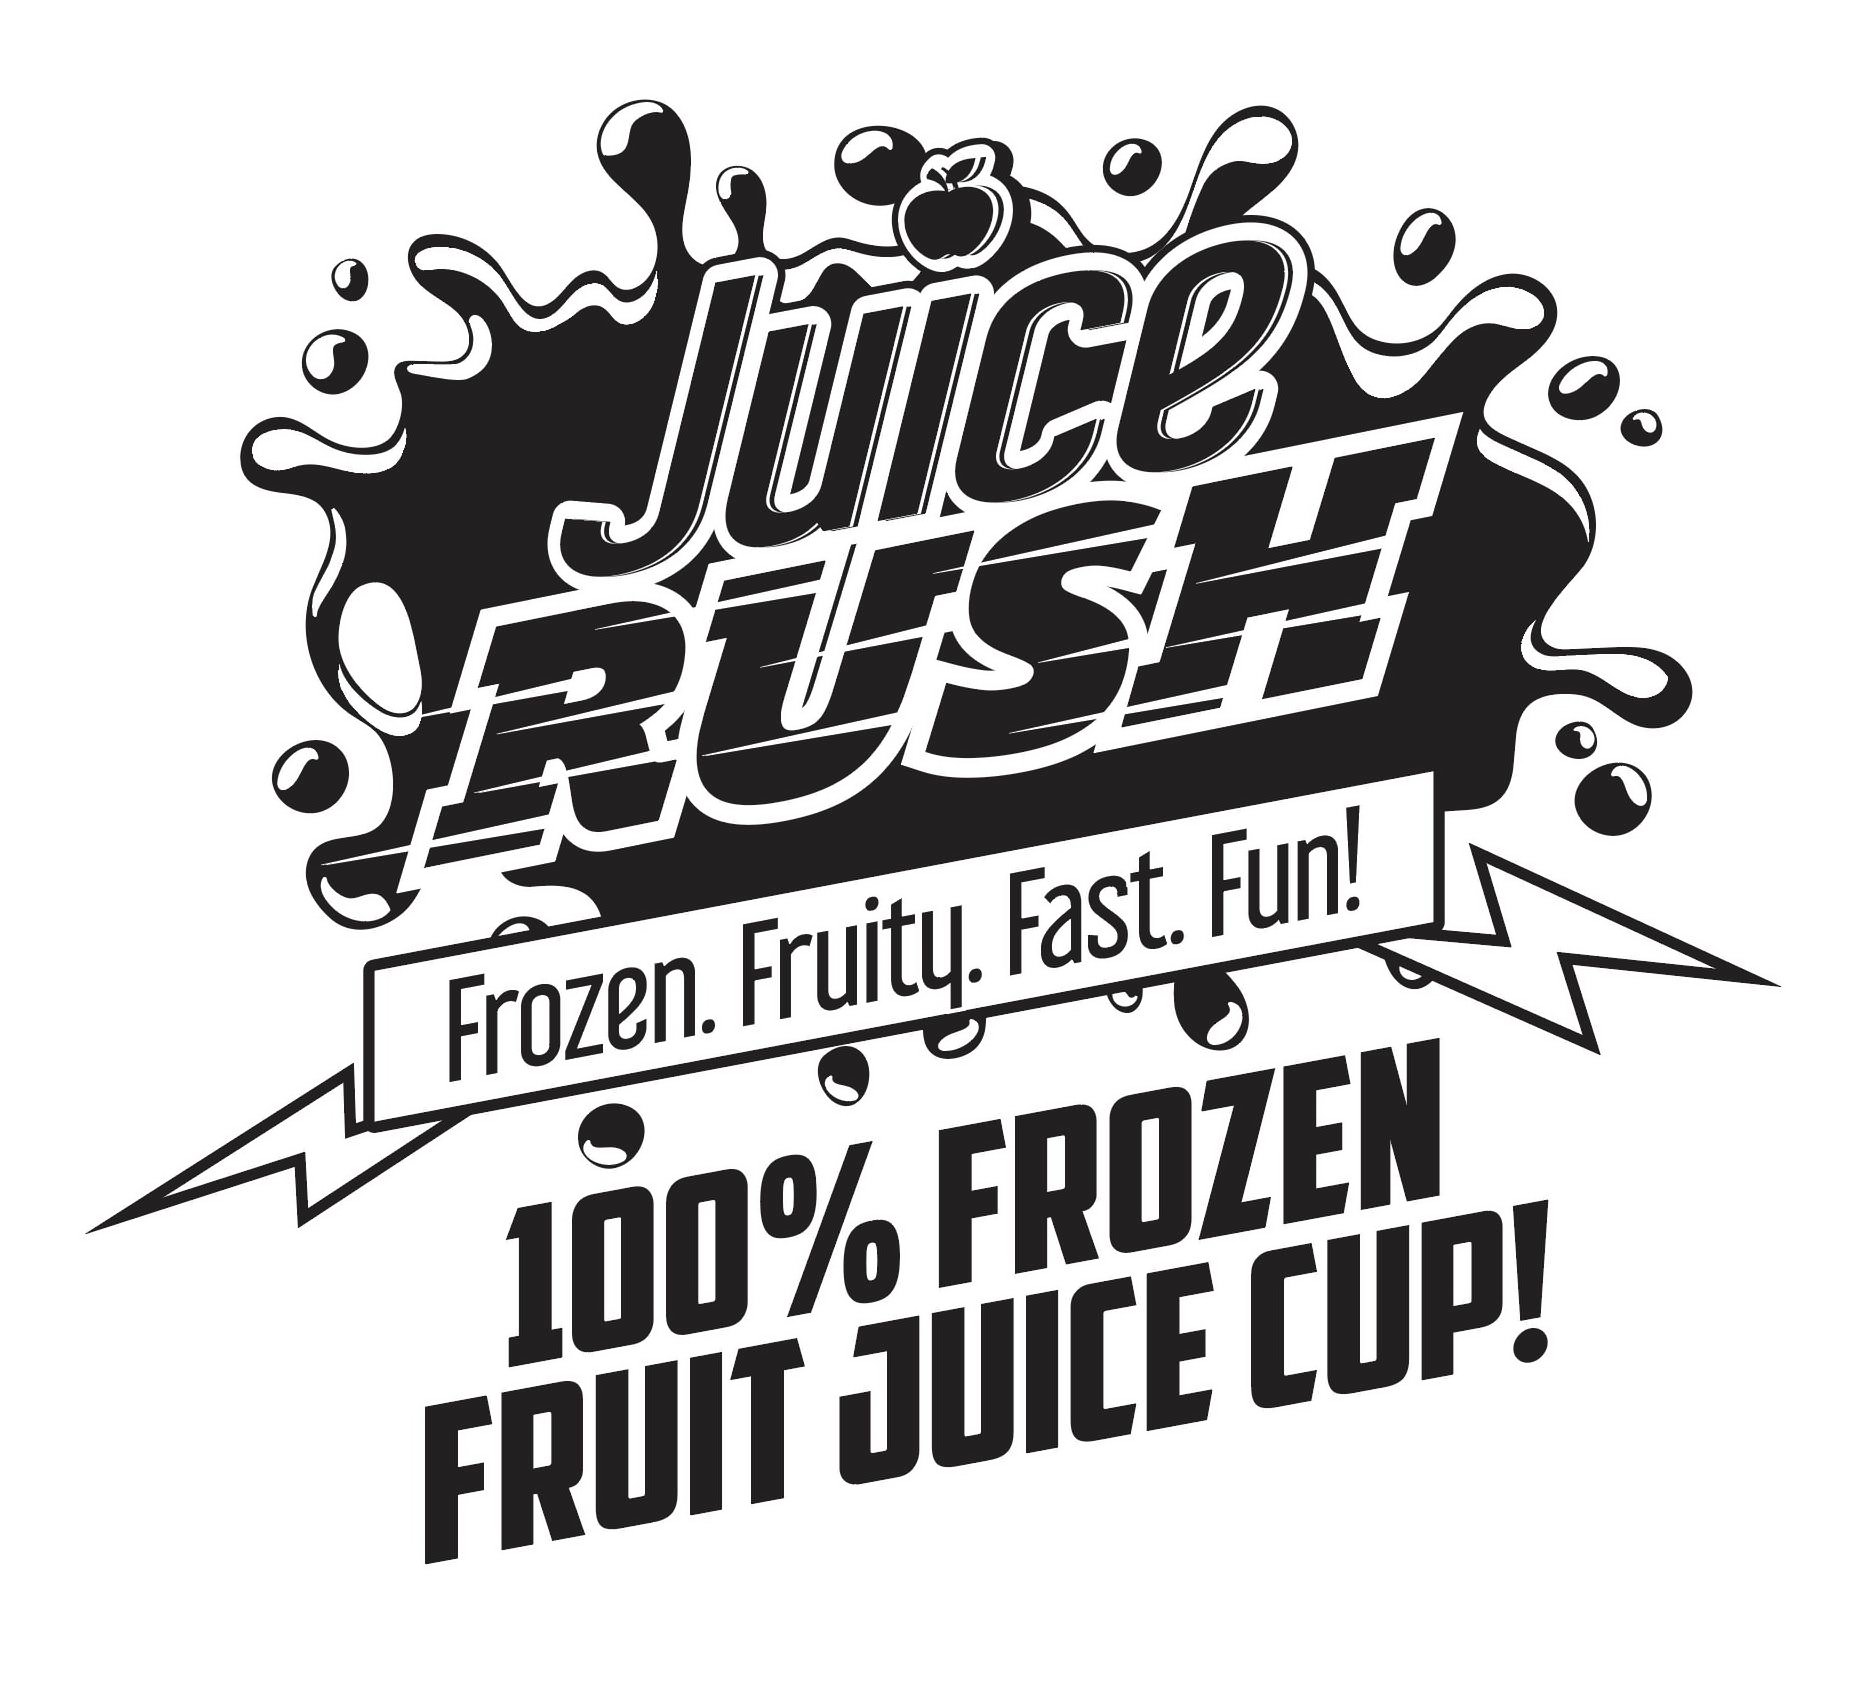  JUICE RUSH FROZEN. FRUITY. FAST. FUN! 100% FROZEN FRUIT JUICE CUP!